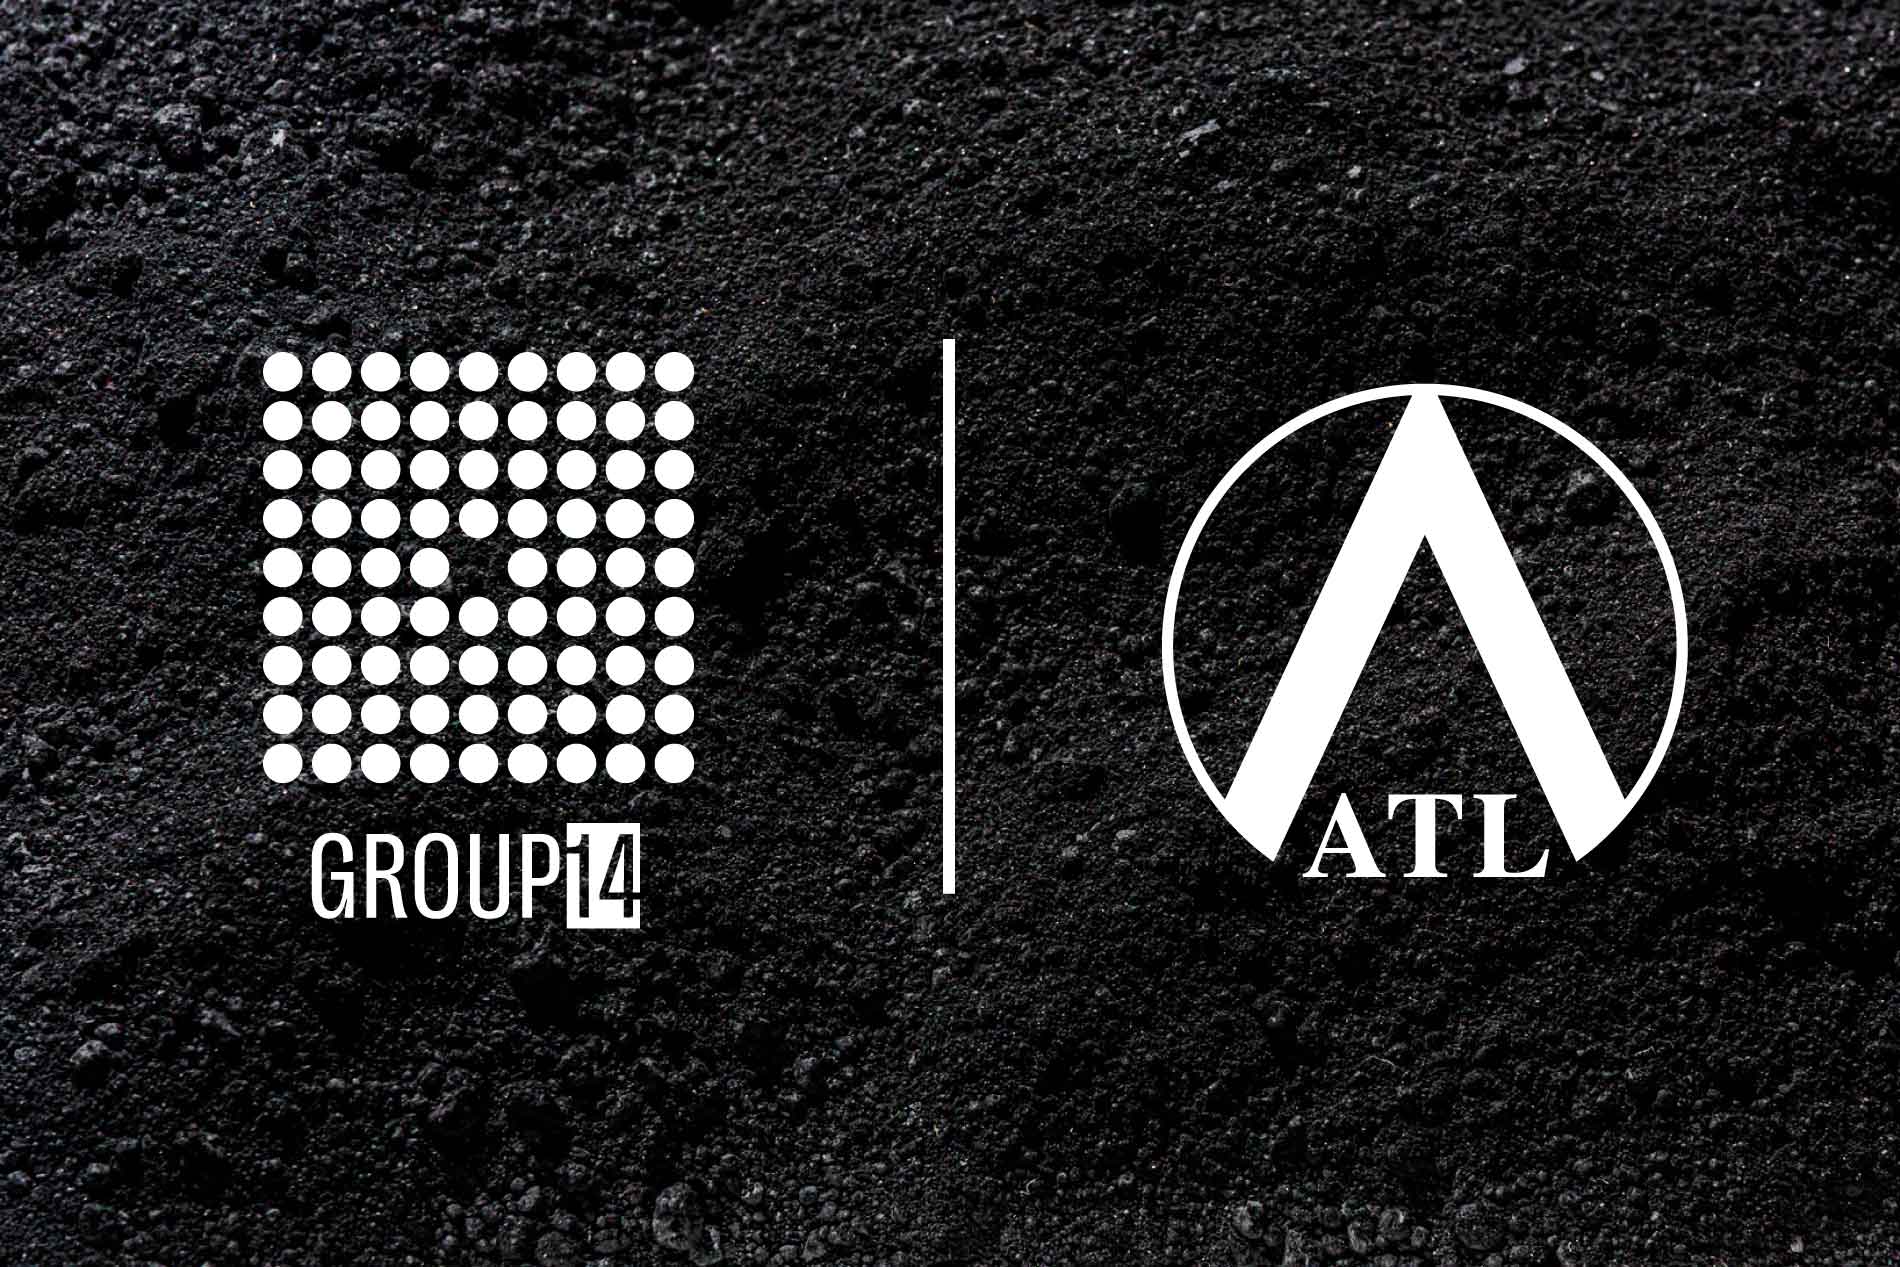 Group14's logo next to ATL's logo 